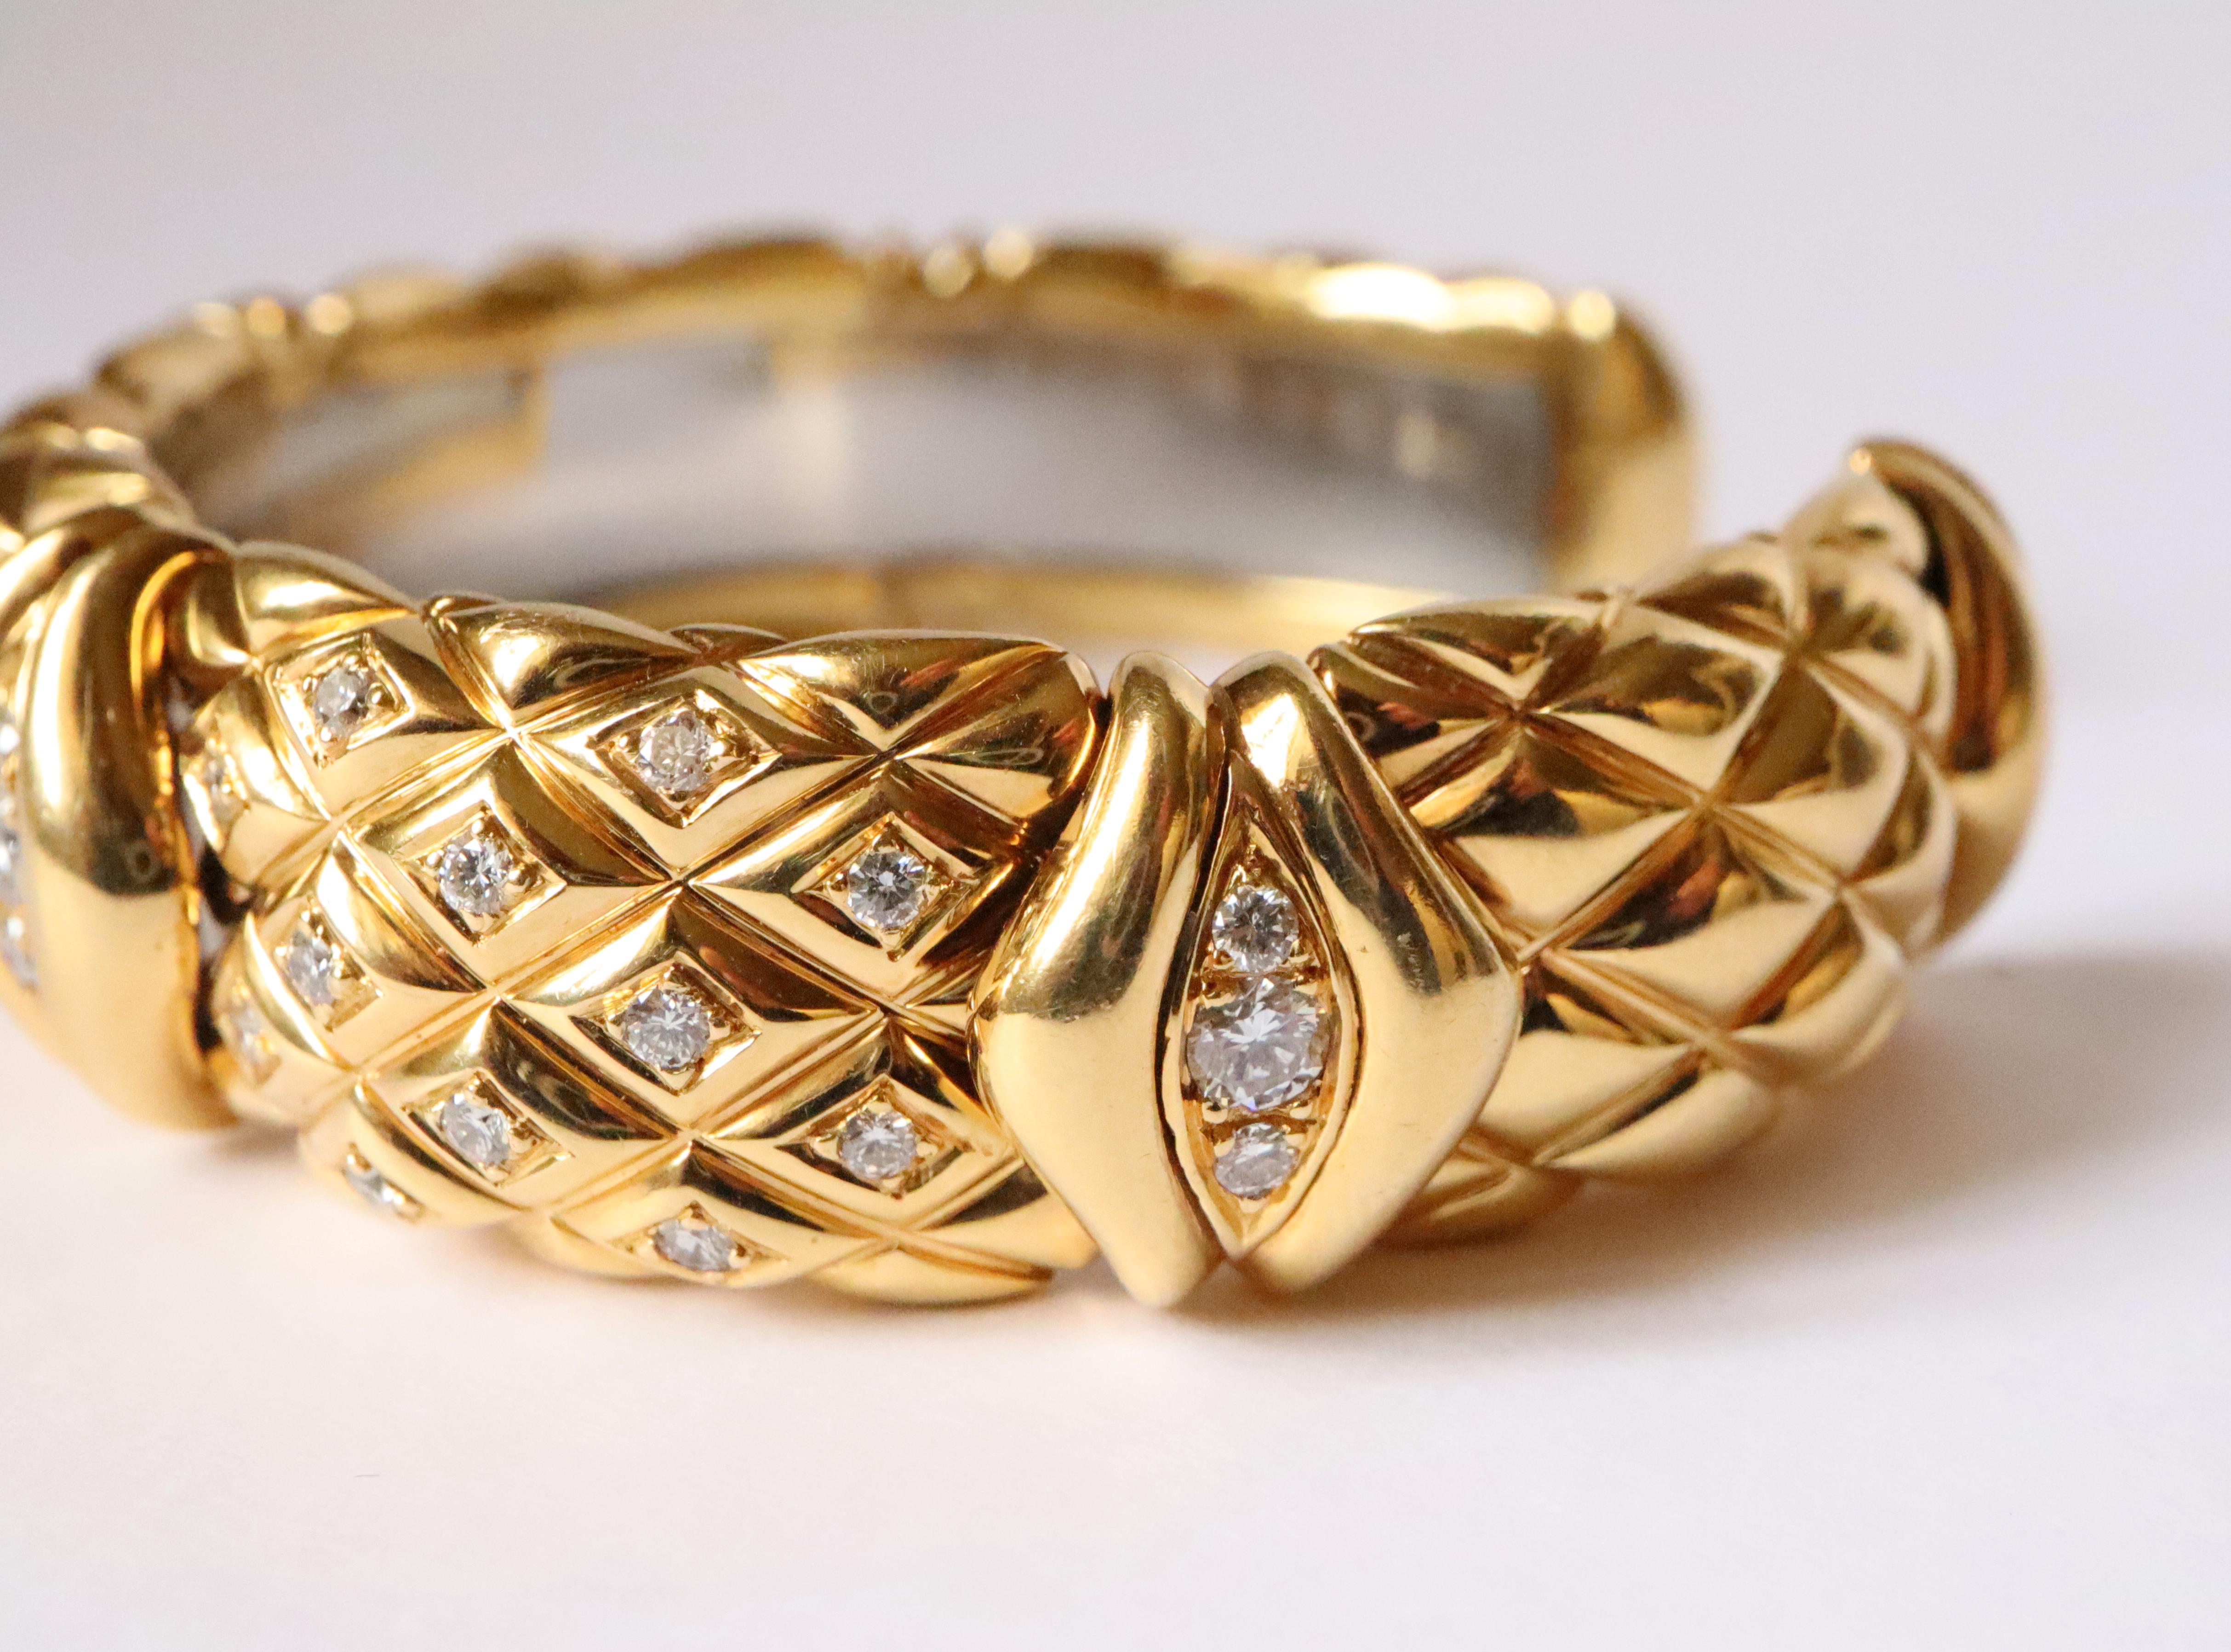 Mauboussin Semi-Rigid Bracelet in 18 Kt Yellow Gold and Diamonds For Sale 2